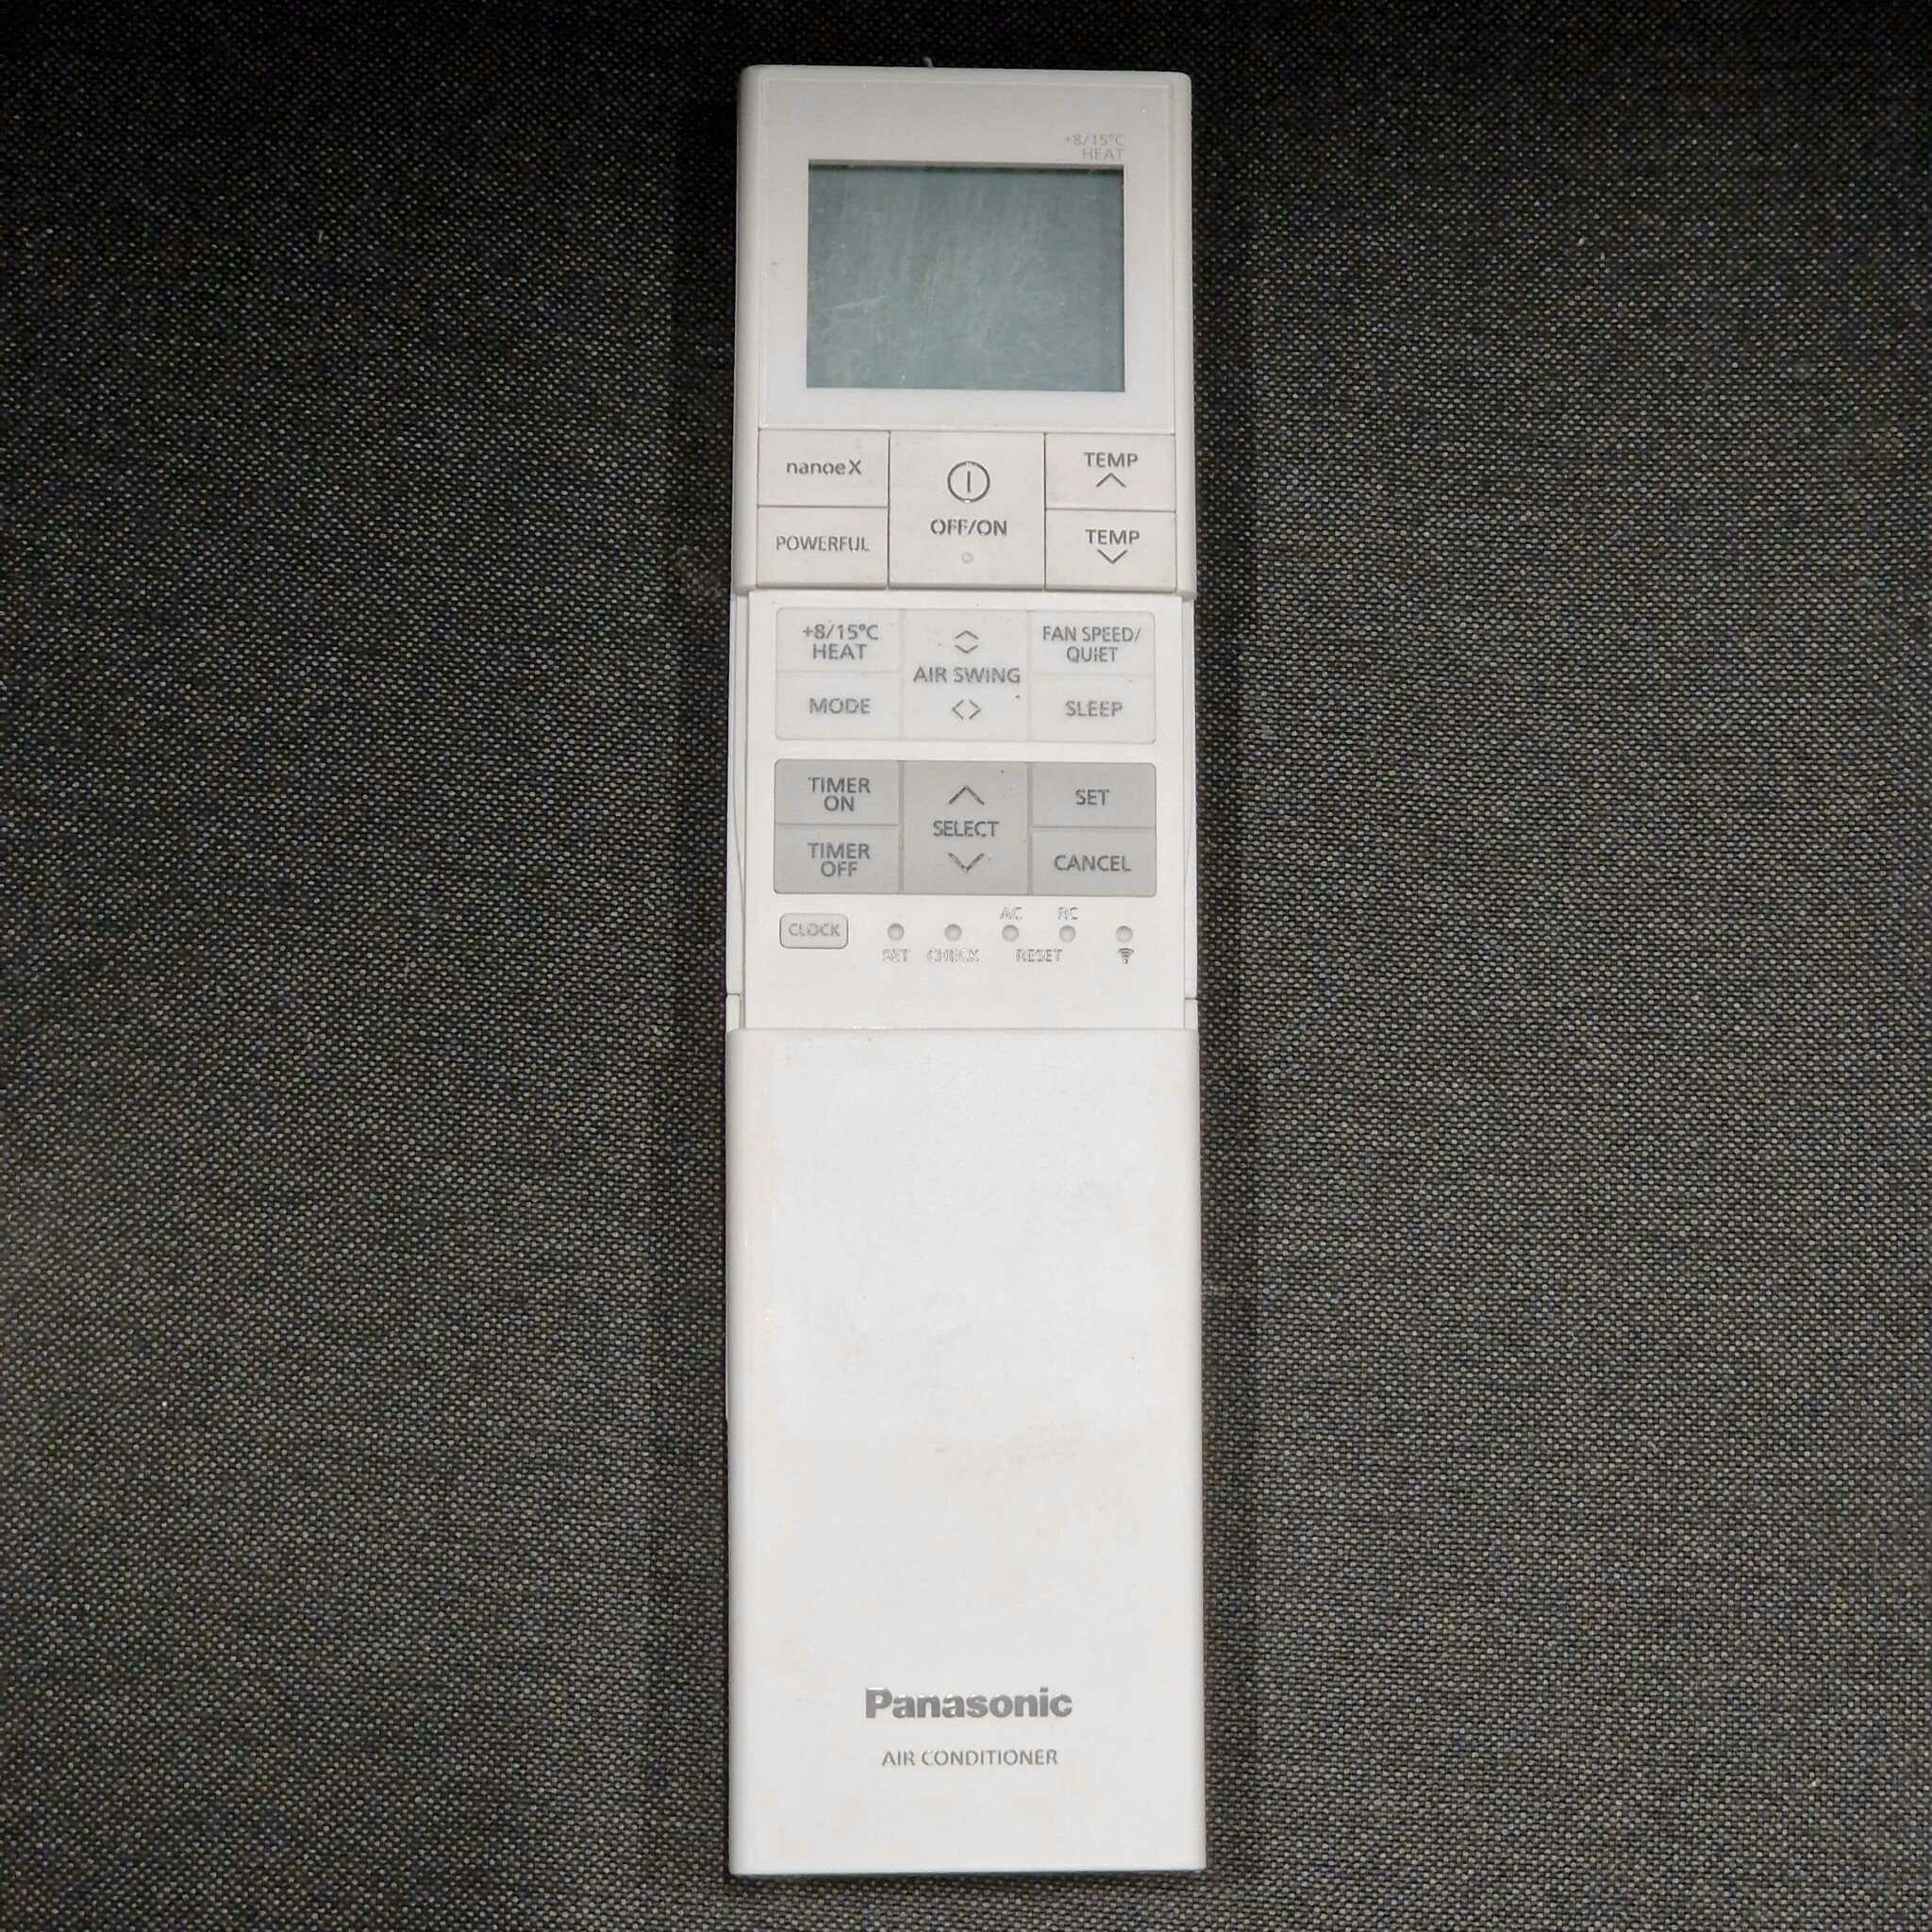 Panasonic Remote Control Part no. 21260 - Refurbished & Tested